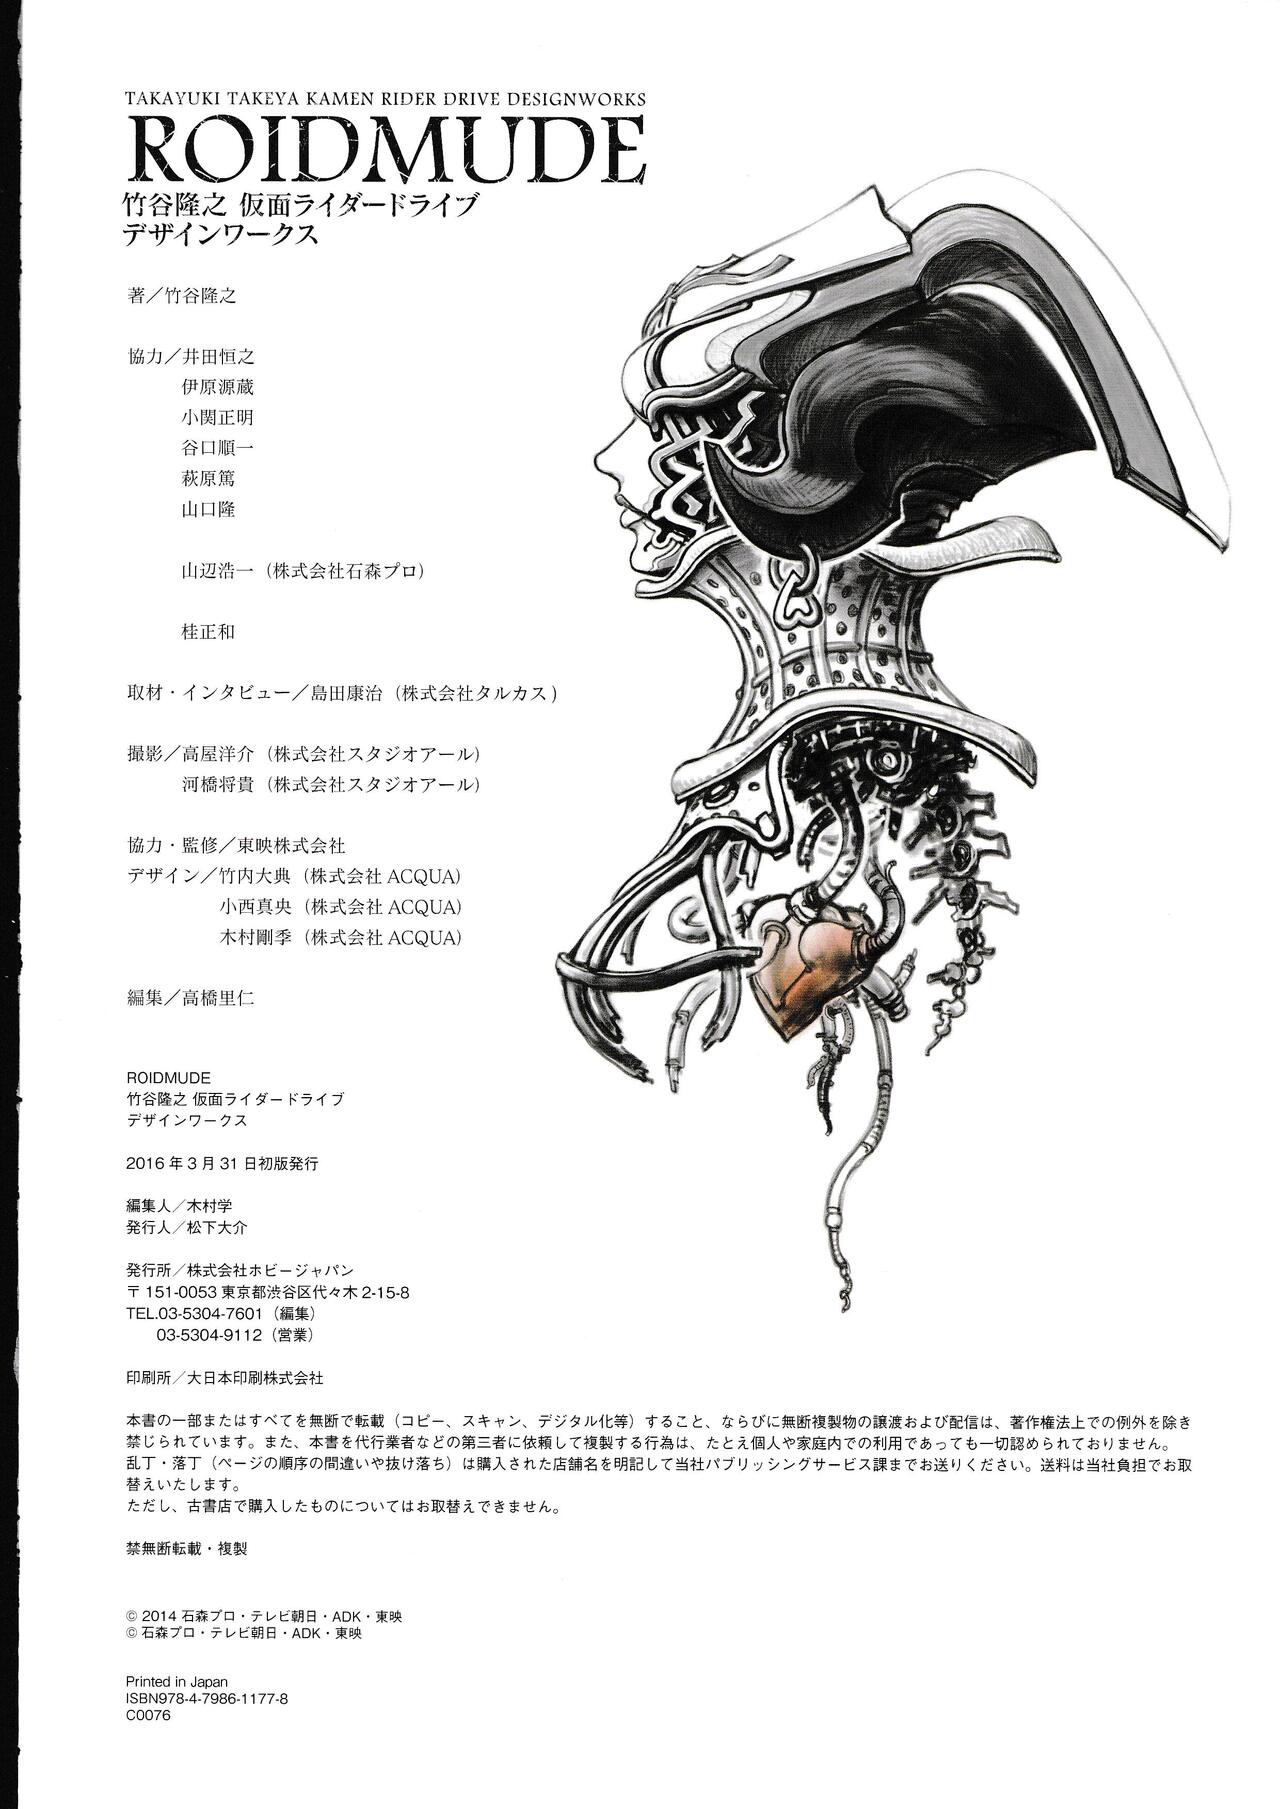 ROIDMUDE Takayuki Takeya Kamen Rider Drive Design Works - 全一卷(3/3) - 1